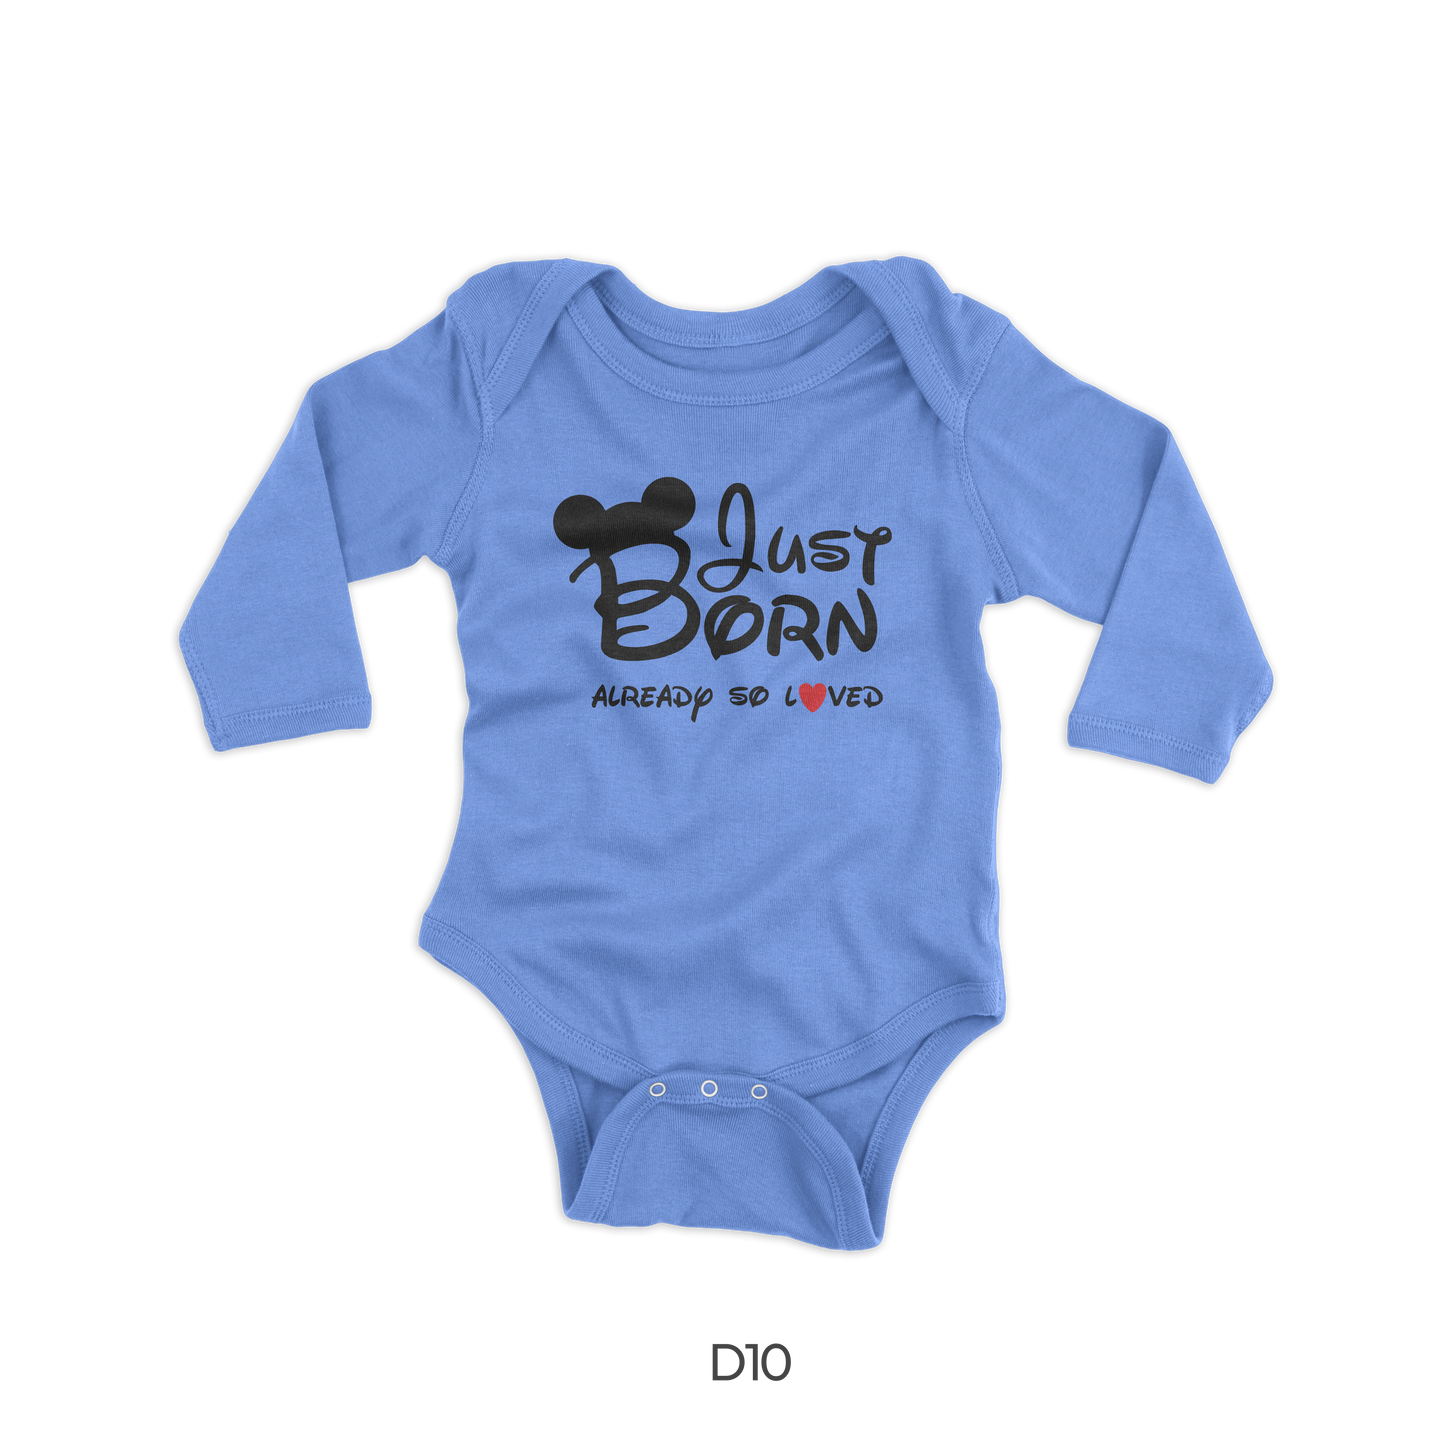 Just Born Already So Loved - Mickey's Version Disney Design (D10)